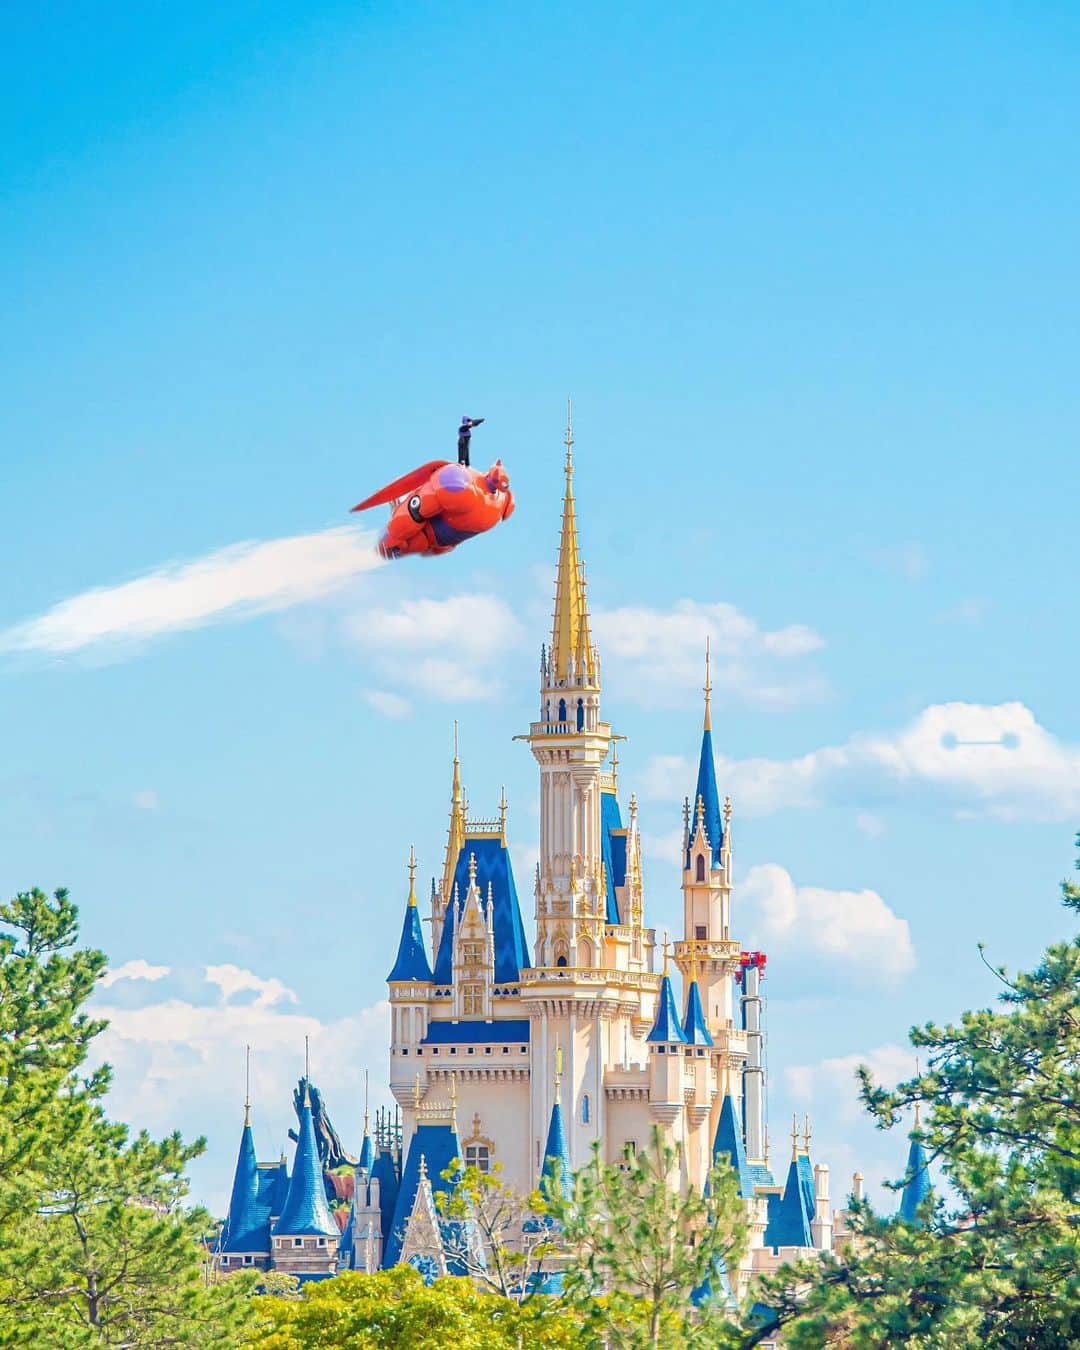 Kahoさんのインスタグラム写真 Kahoinstagram 2年前の写真 この風船懐かしいな 下にリボンがついてて可愛かったんだよね Disneyland Tokyodisneyresort Tdr Tdl Disneygram Instadisney Disneyparks Disneyfan Disneyphoto